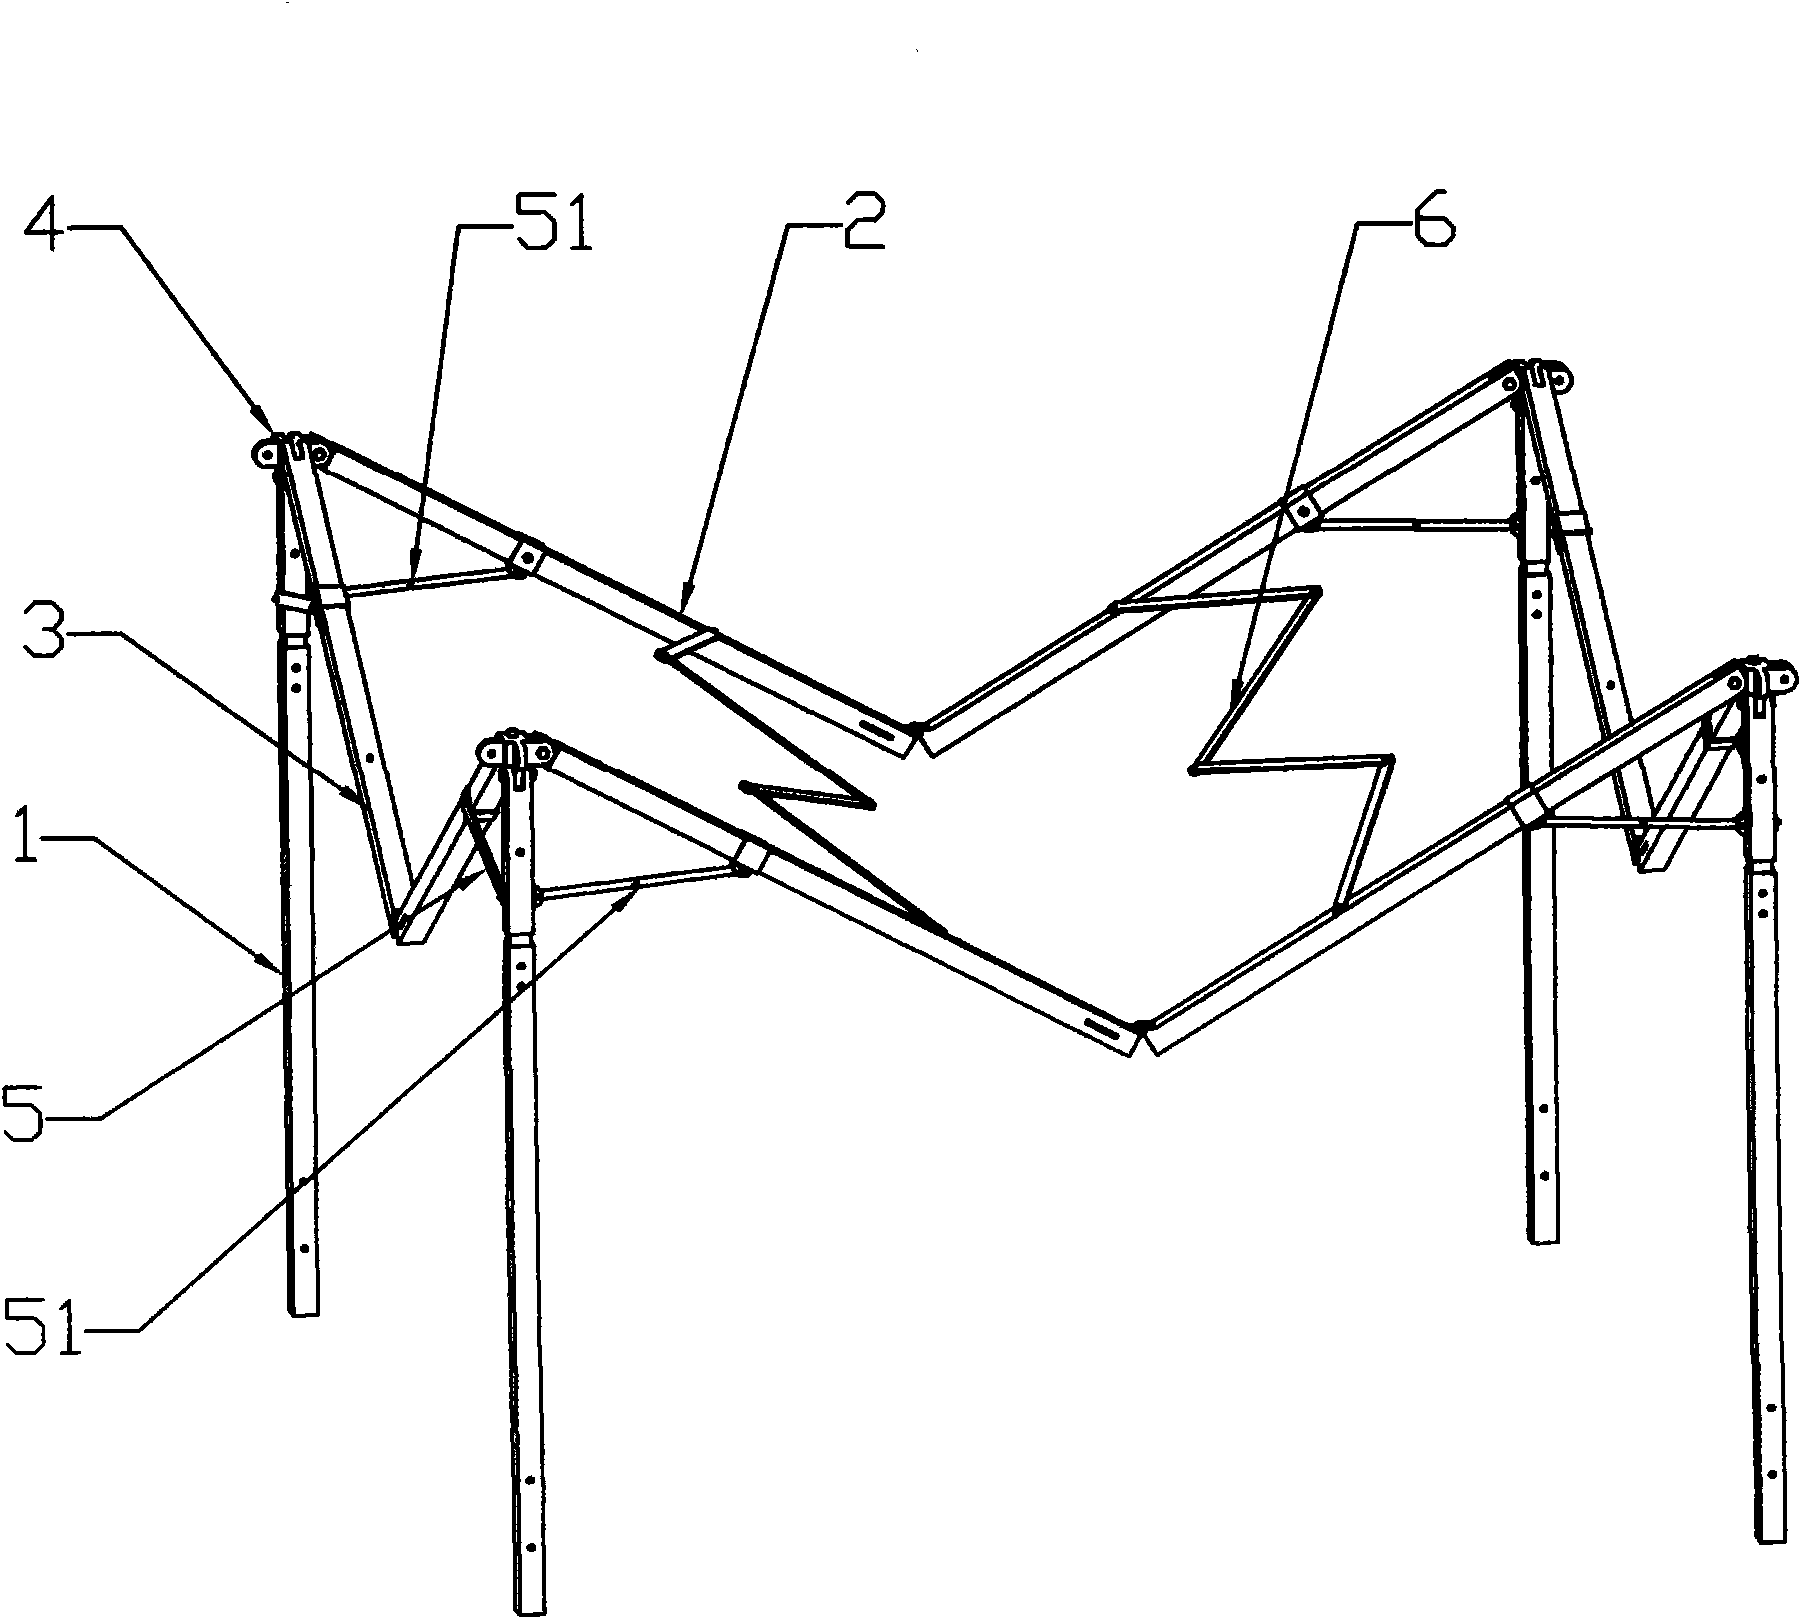 Combinative folding tent